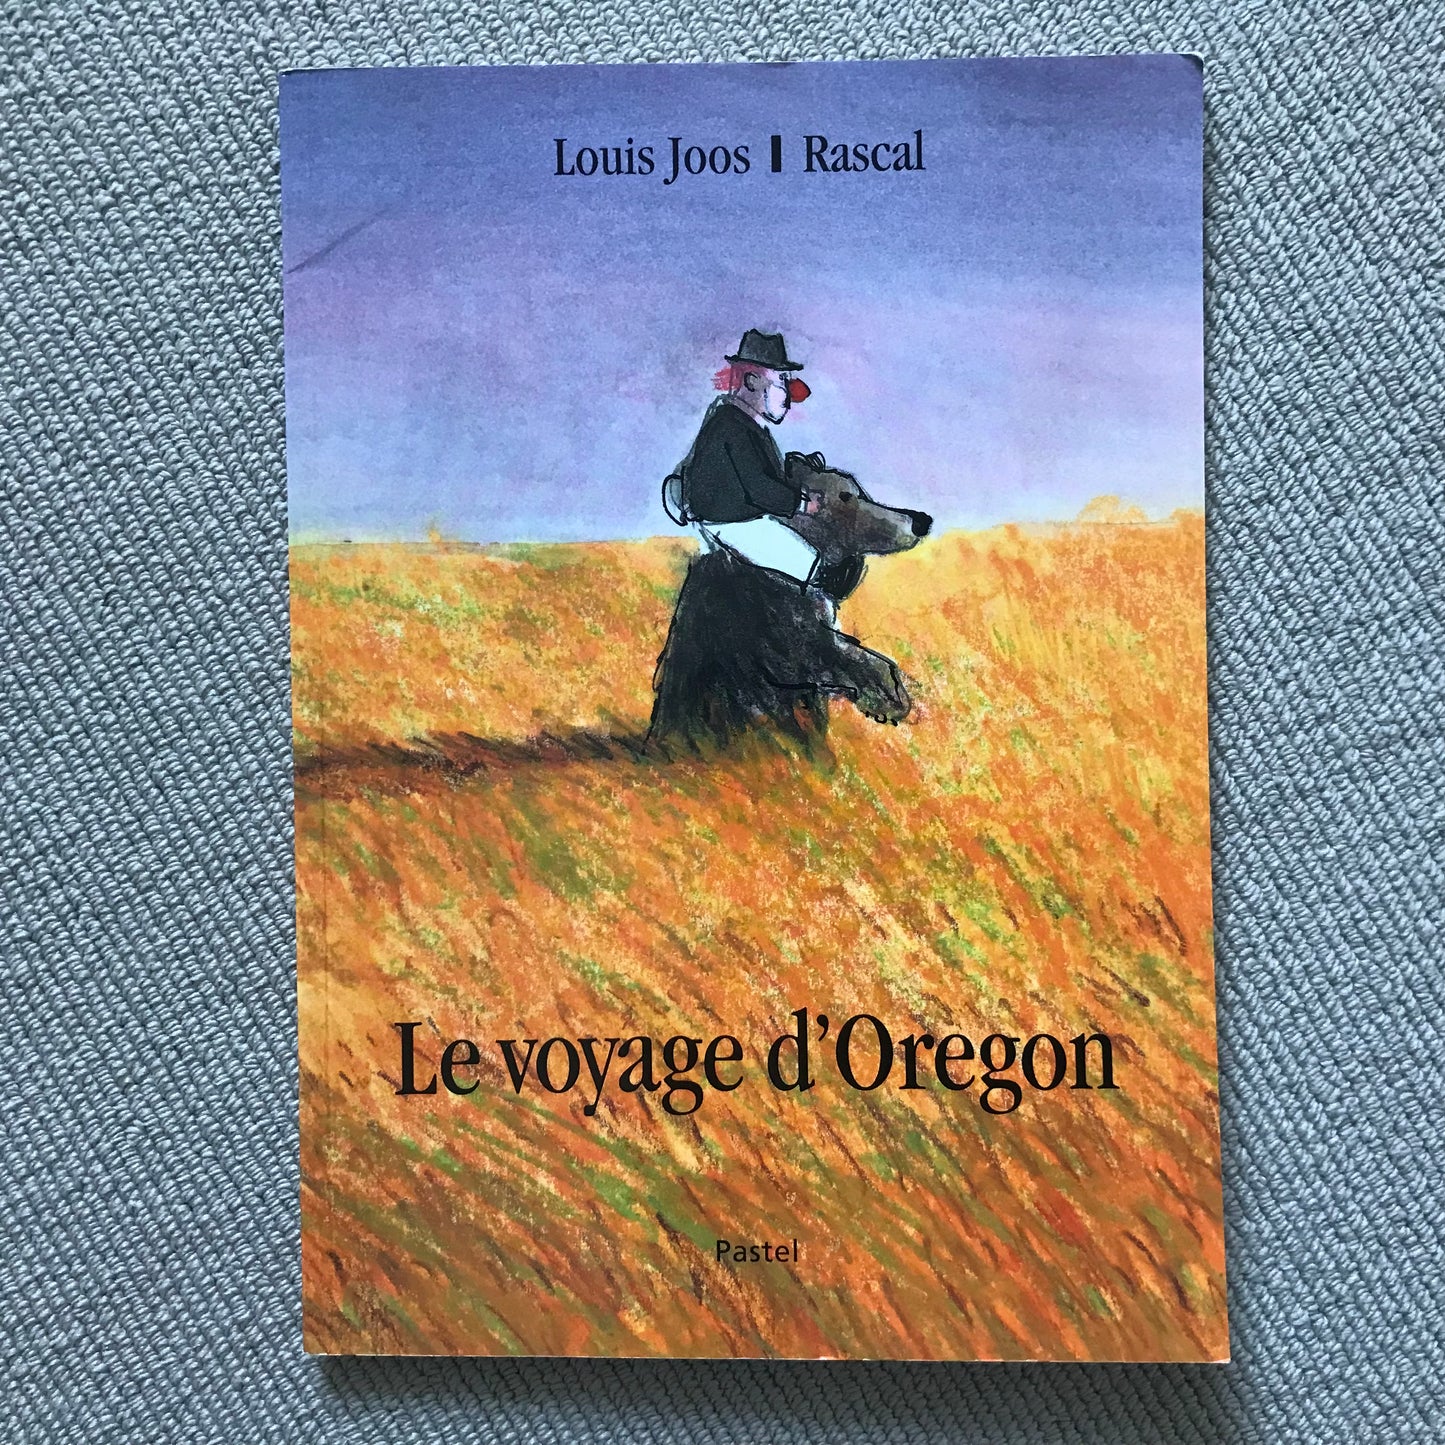 Le voyage d’Oregon - L. Joos & Rascal